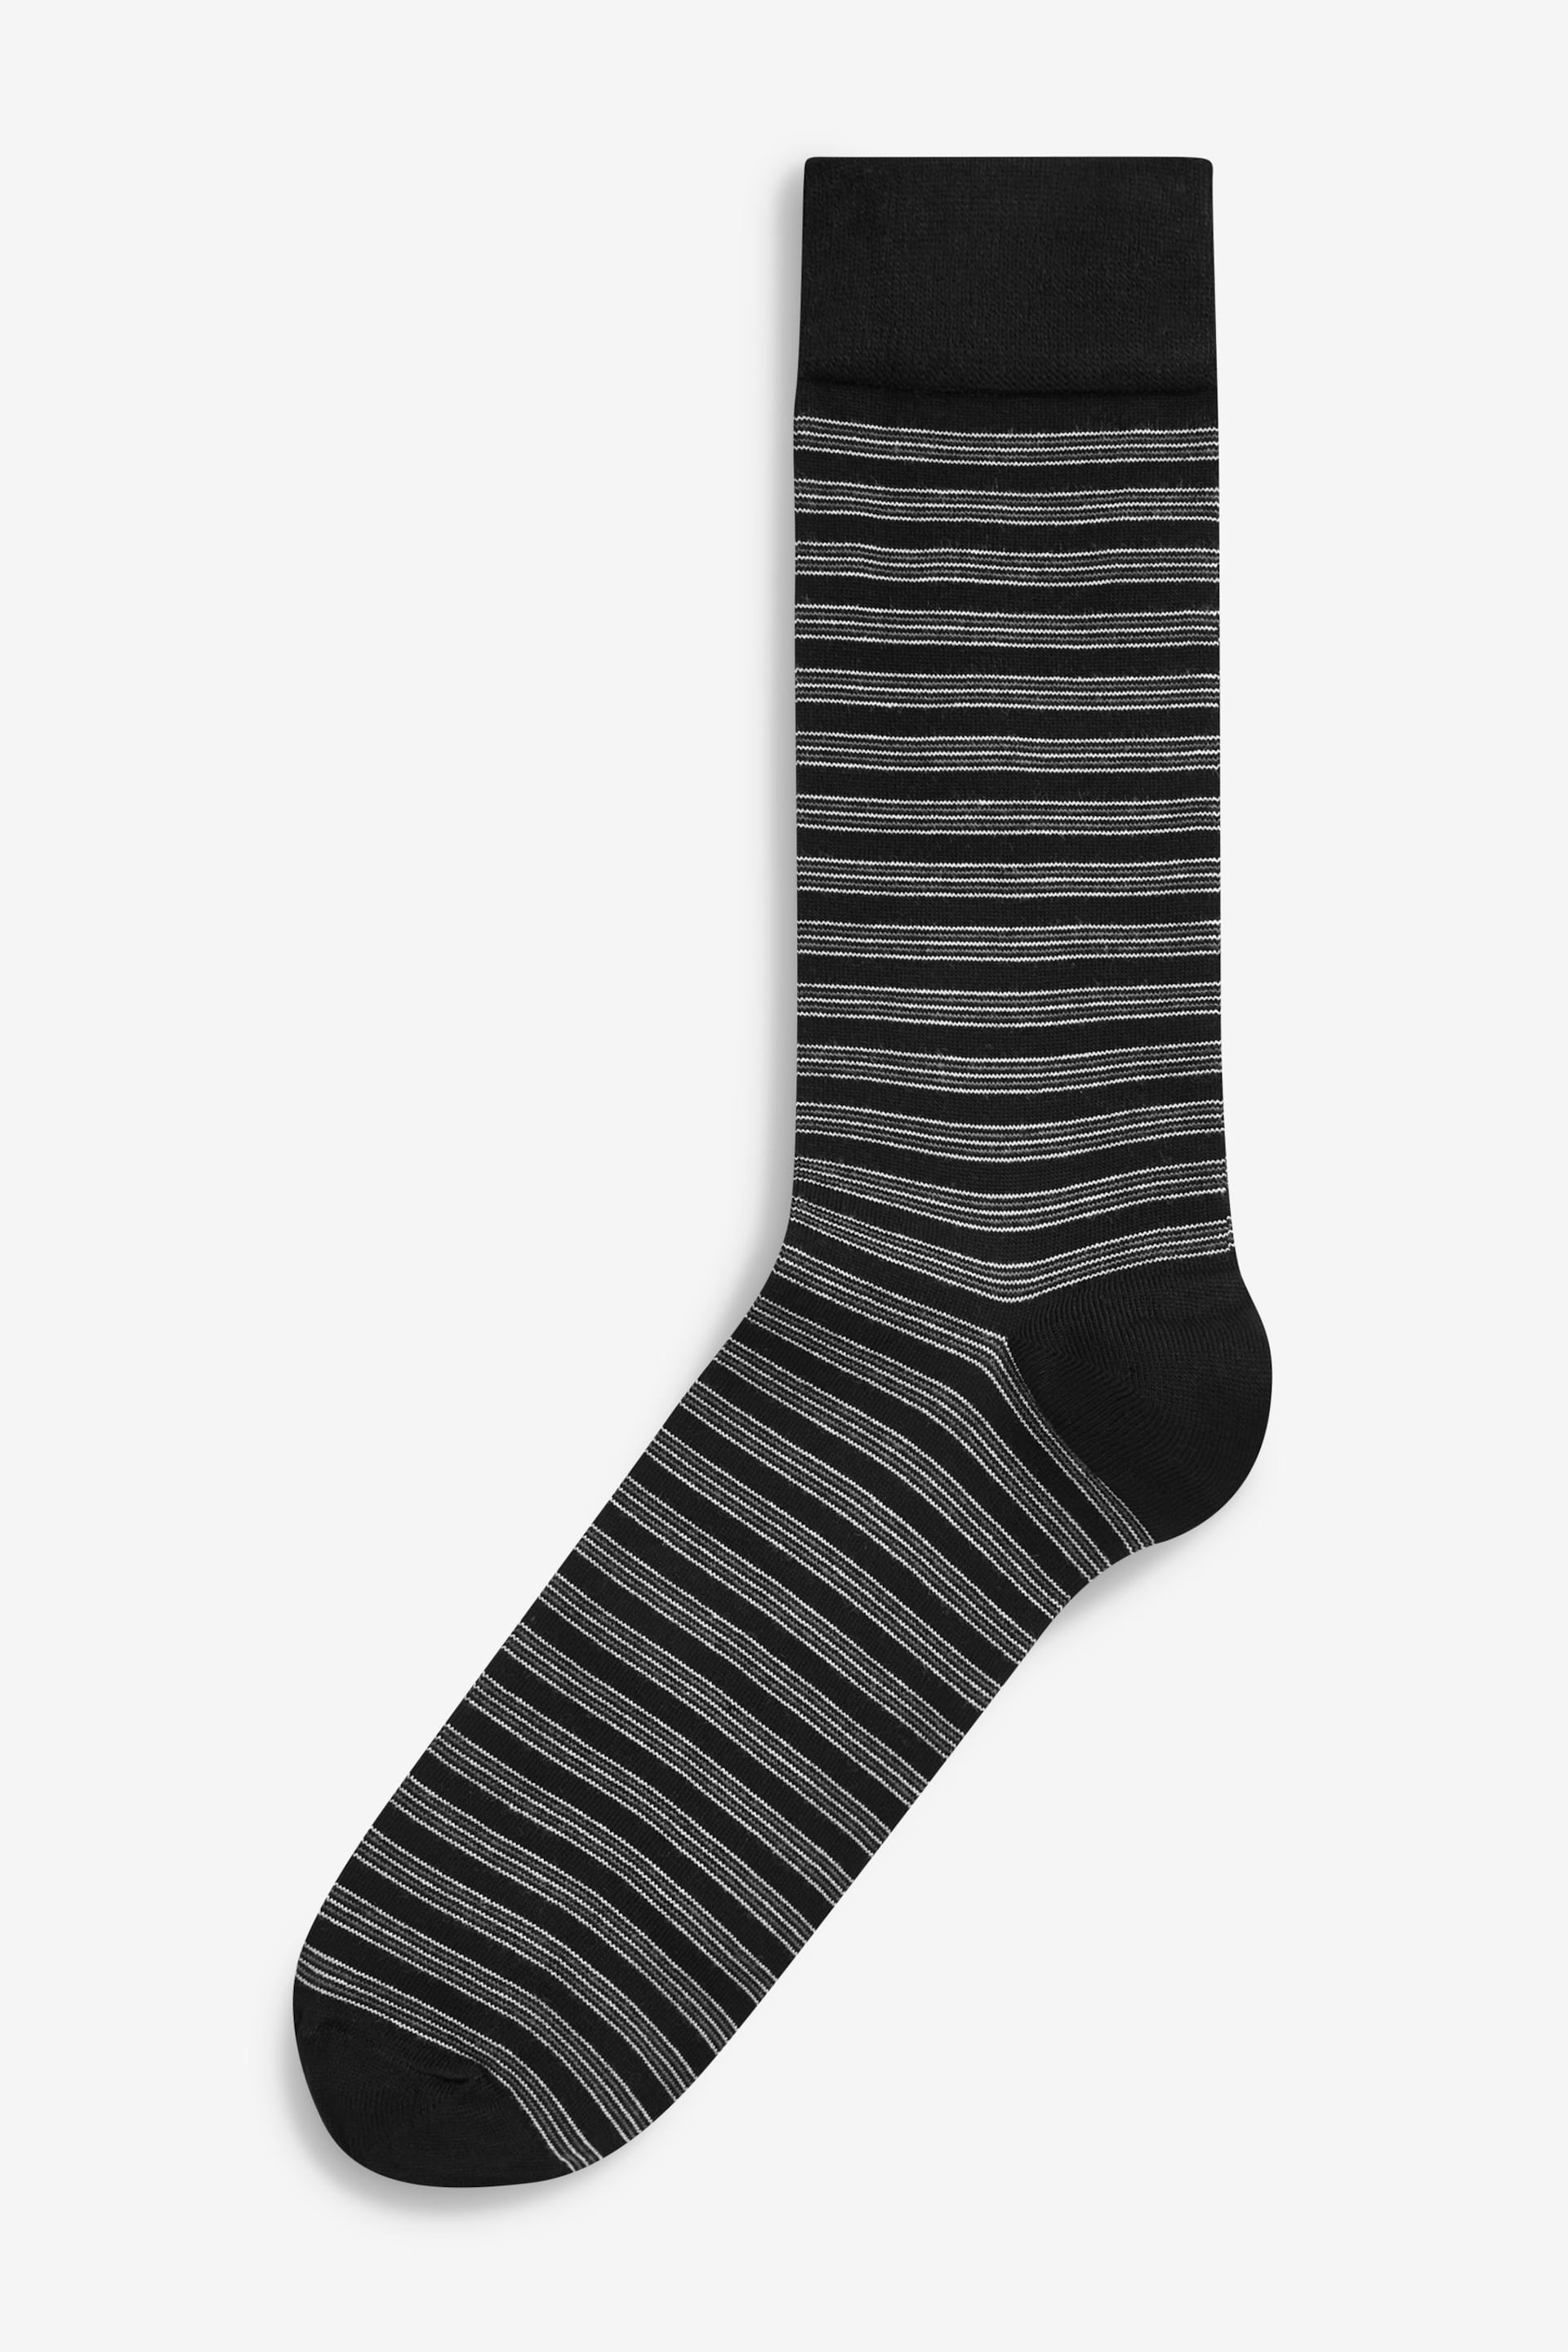 Black Pattern 4 Pack Bamboo Signature Socks - Image 3 of 8